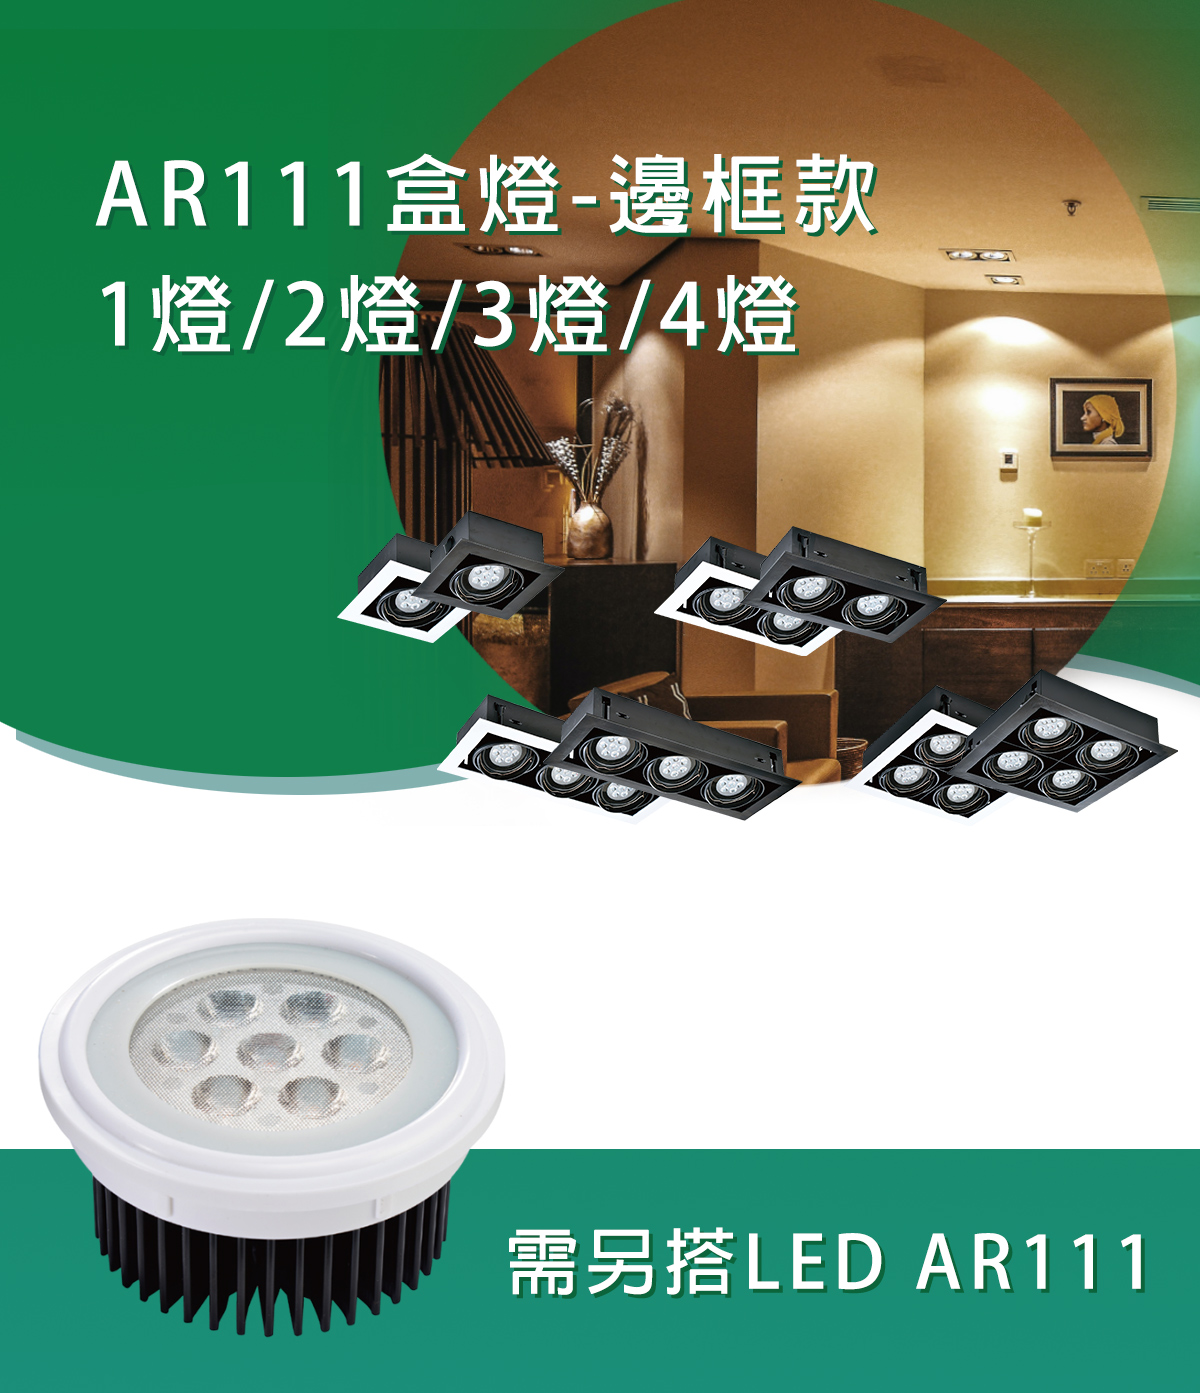 【KAO'S】AR111有框盒燈 方形崁燈 AR111光源另計